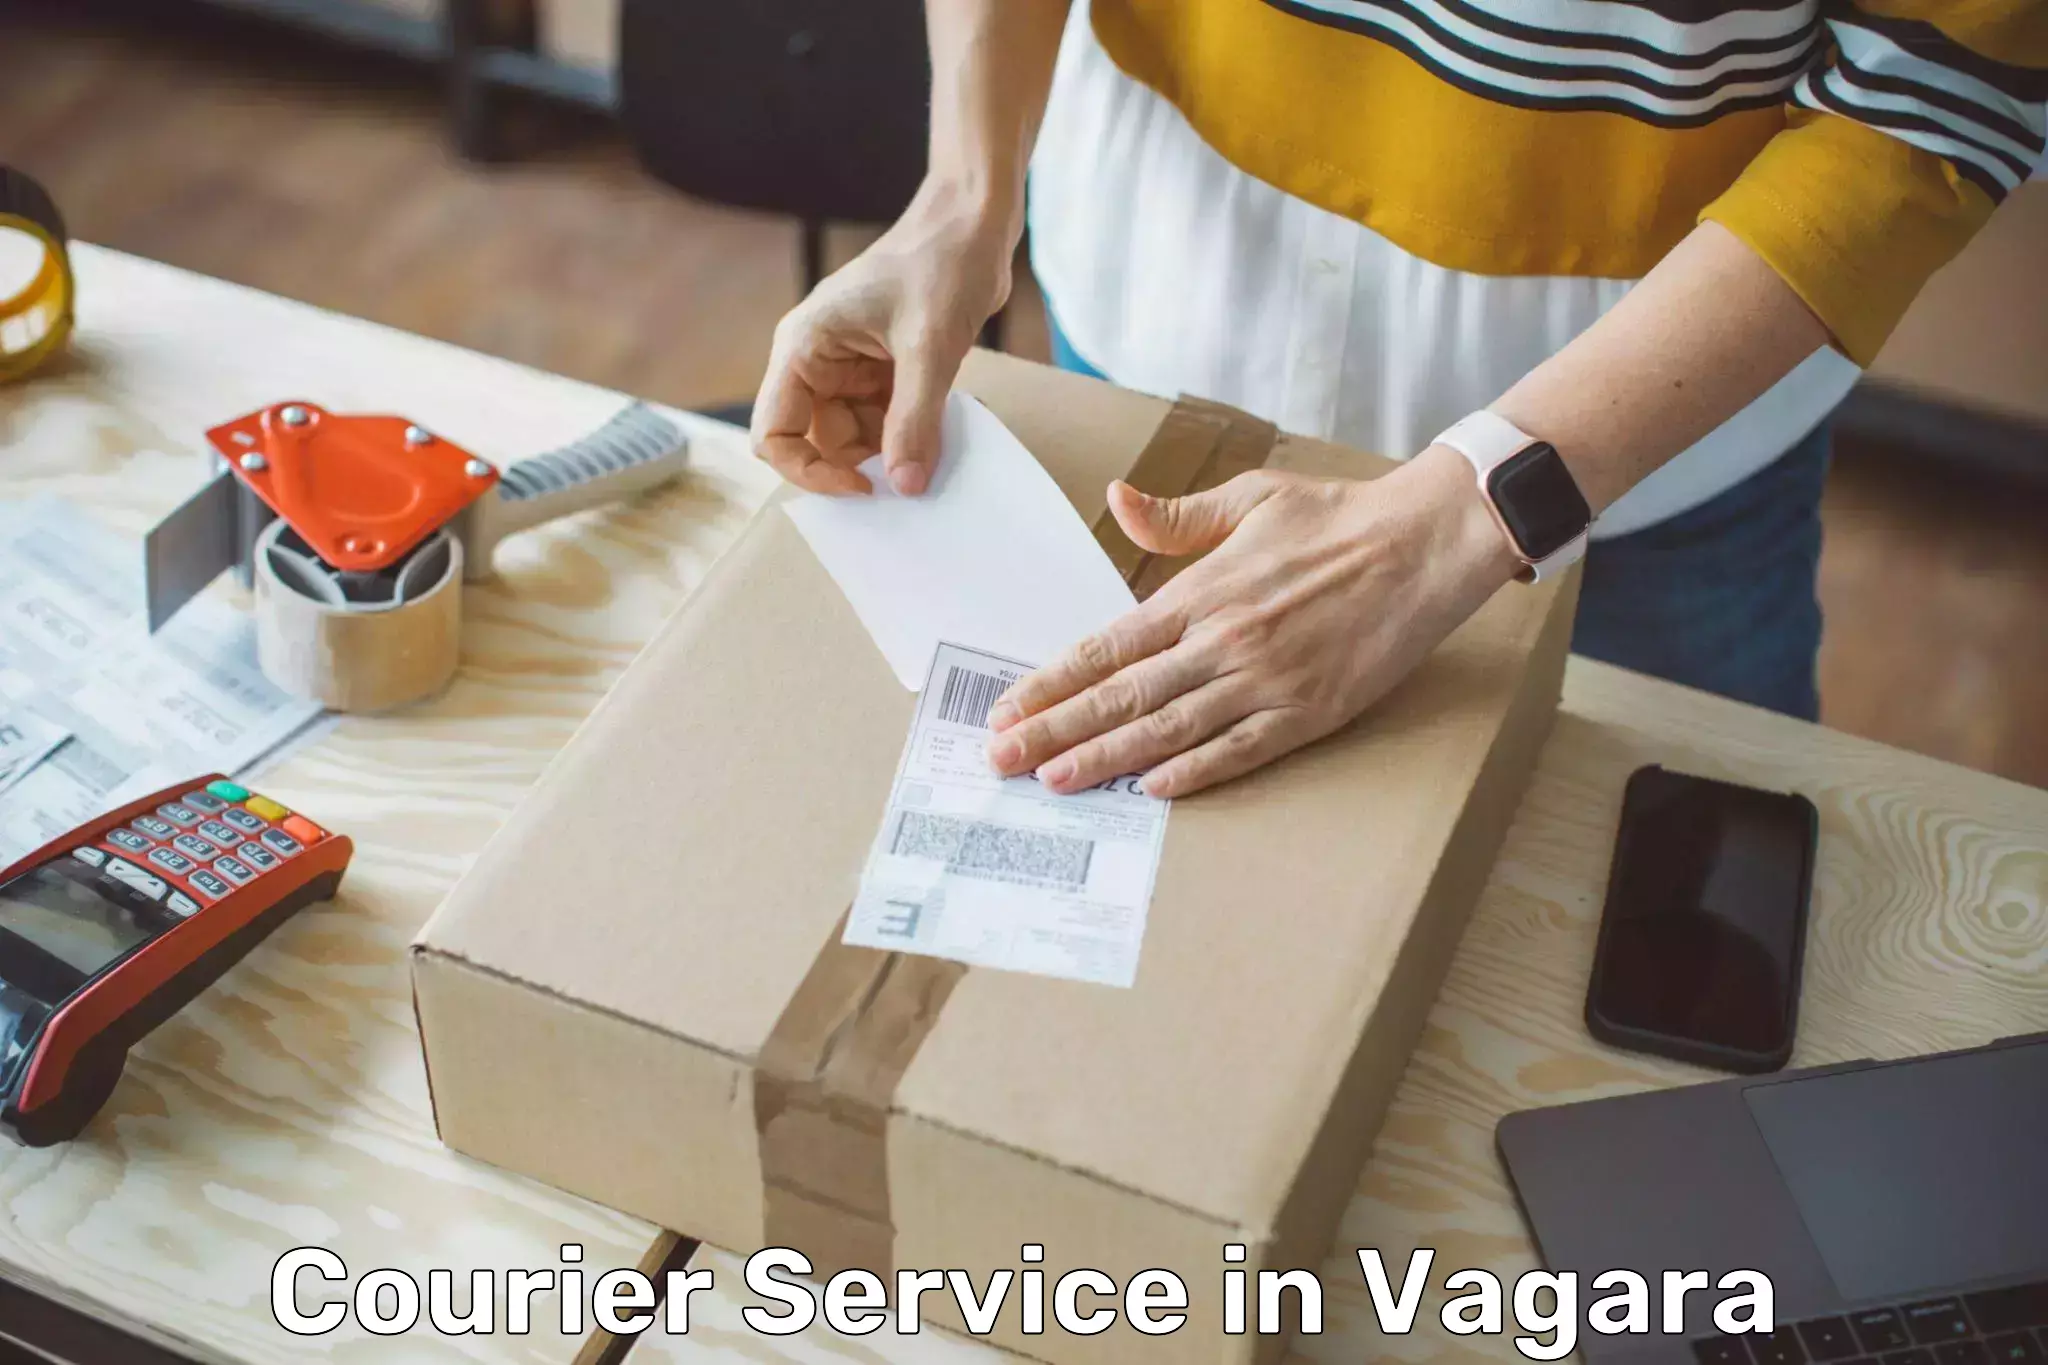 International parcel service in Vagara